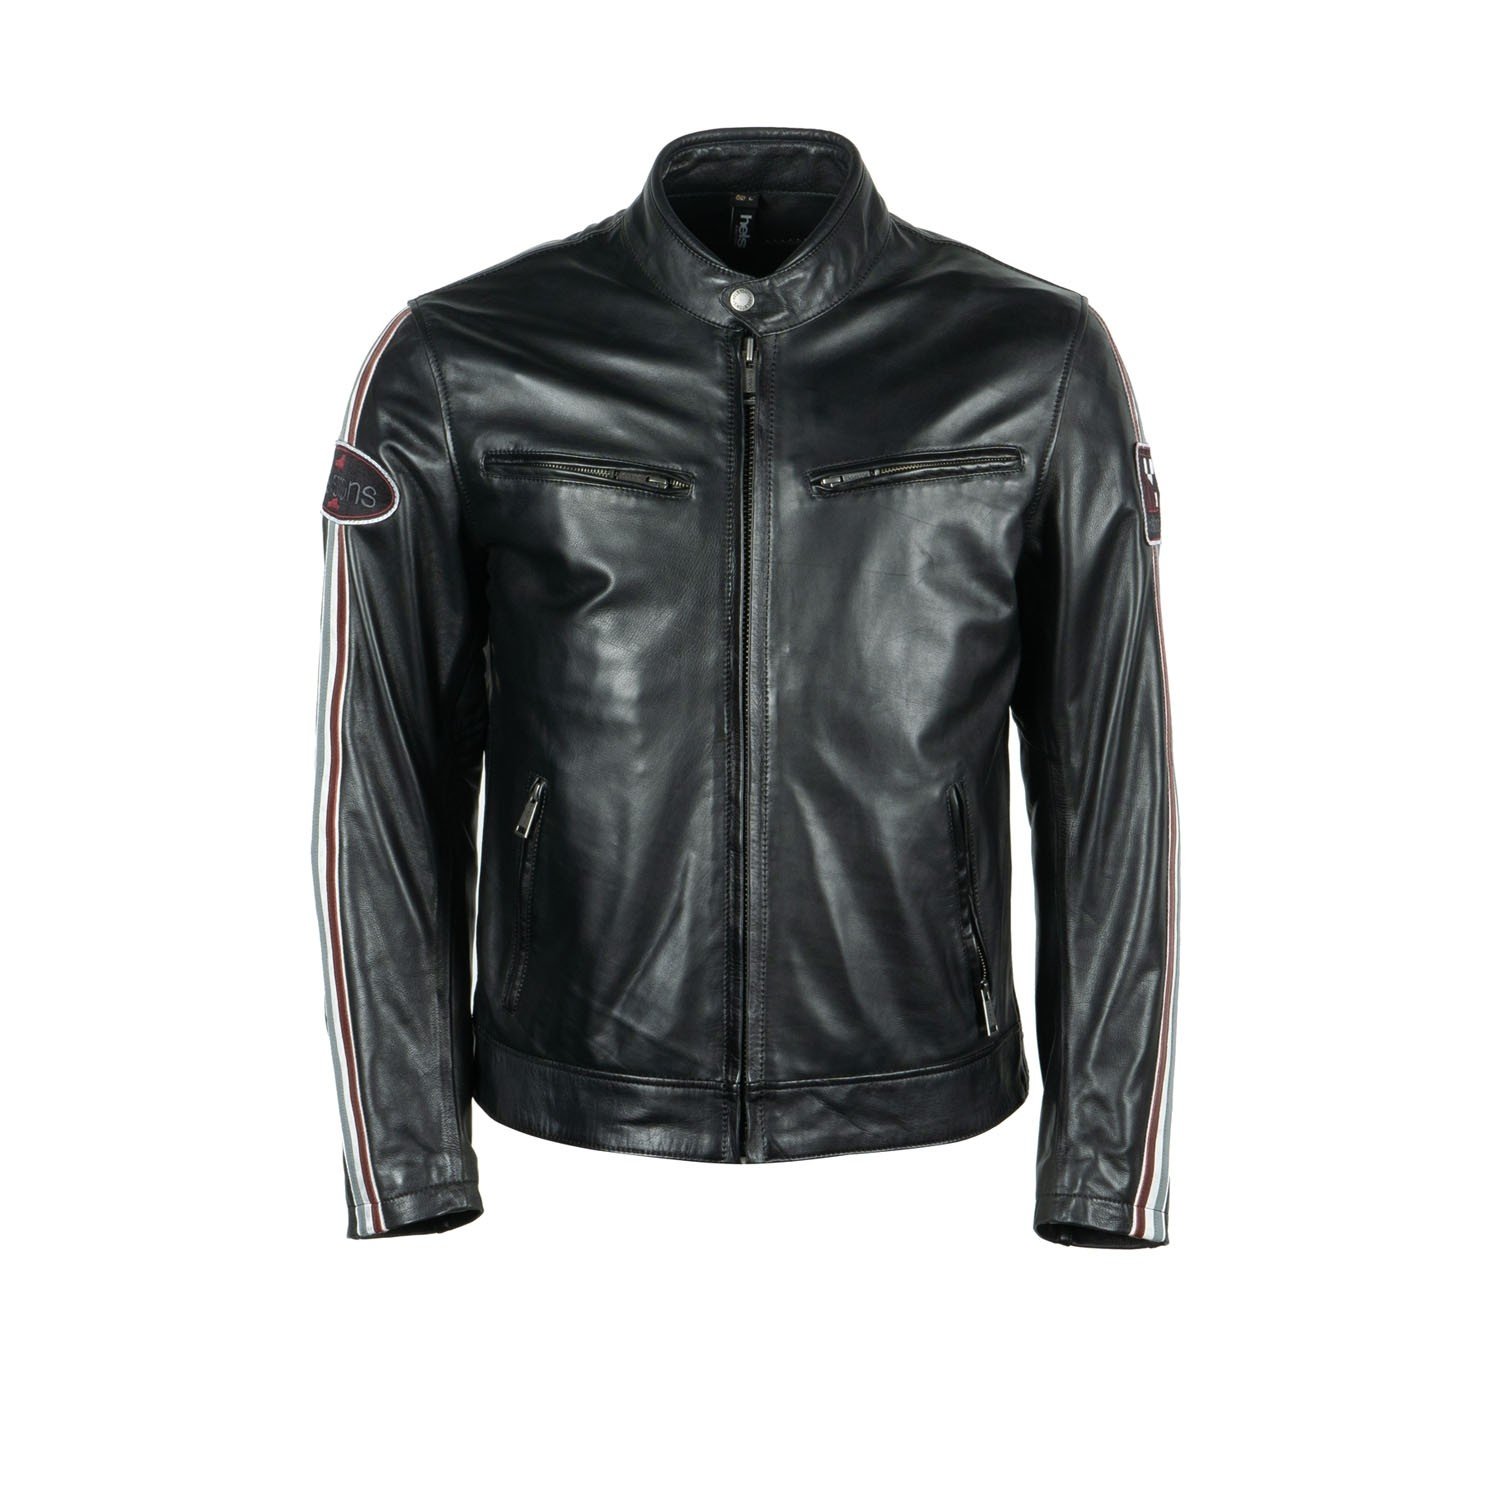 Image of Helstons Race Leather Aniline Jacket Black Size S EN